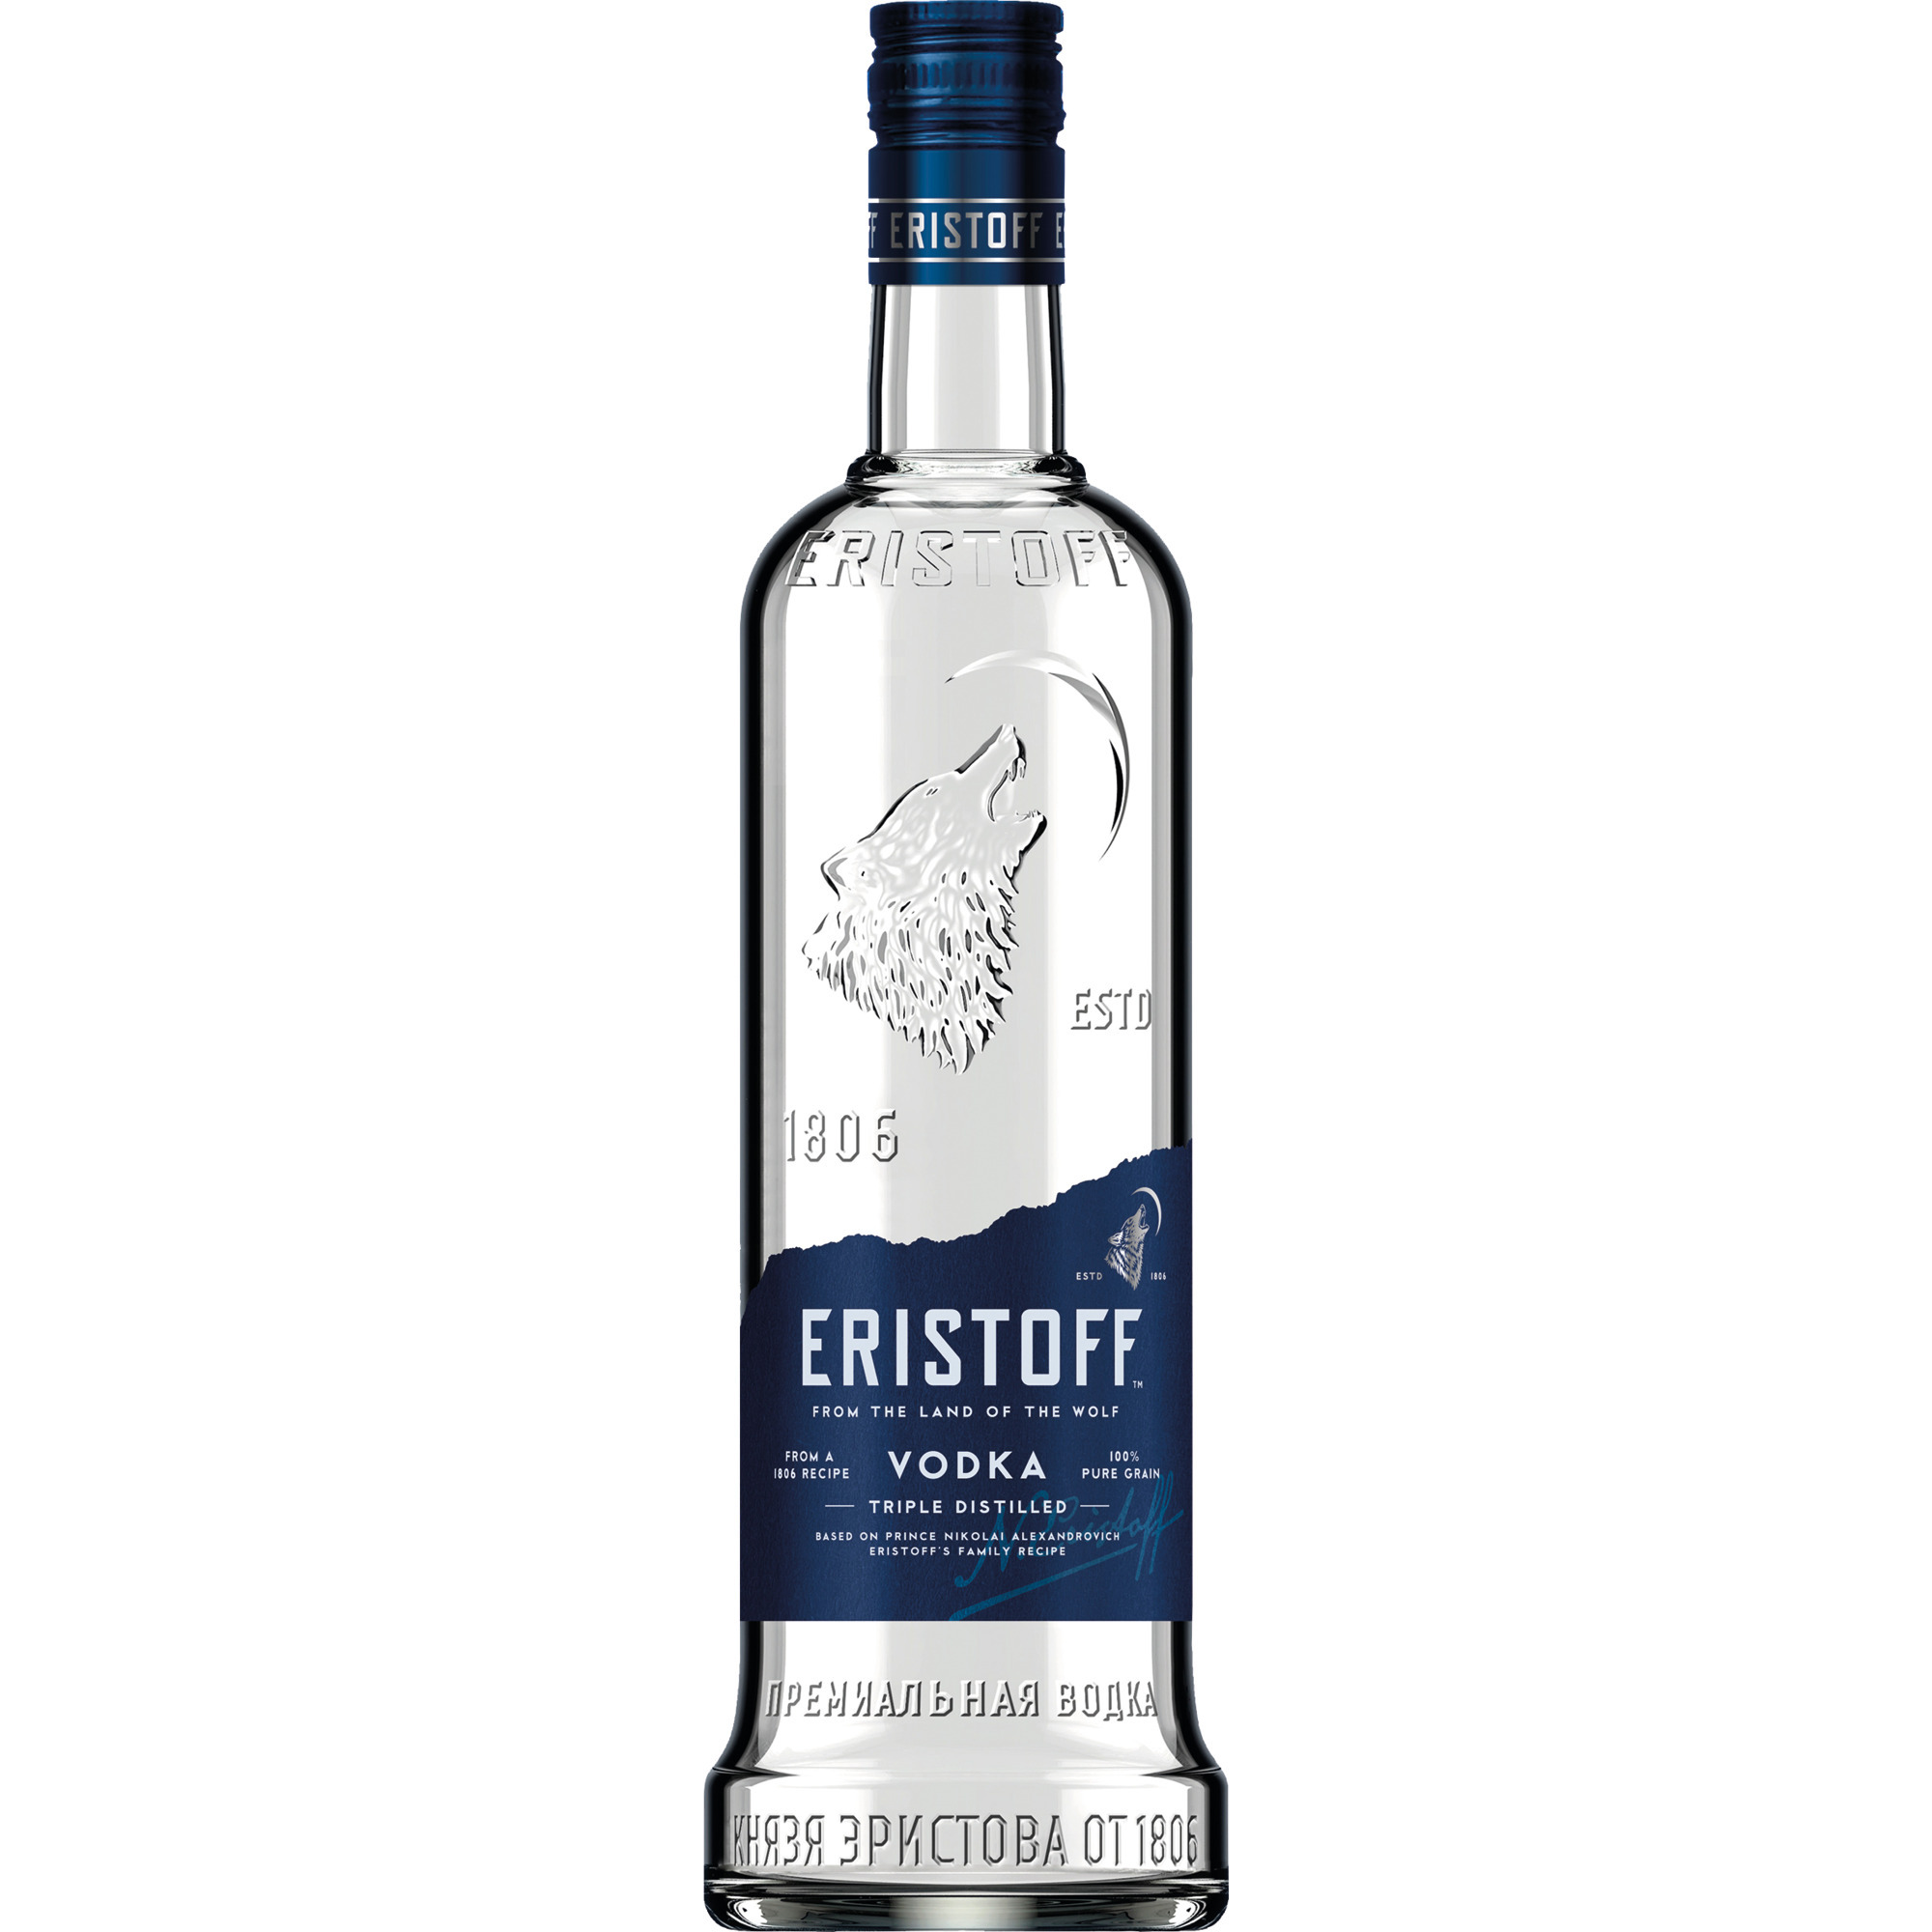 Eristoff Vodka 0,7l, Classic